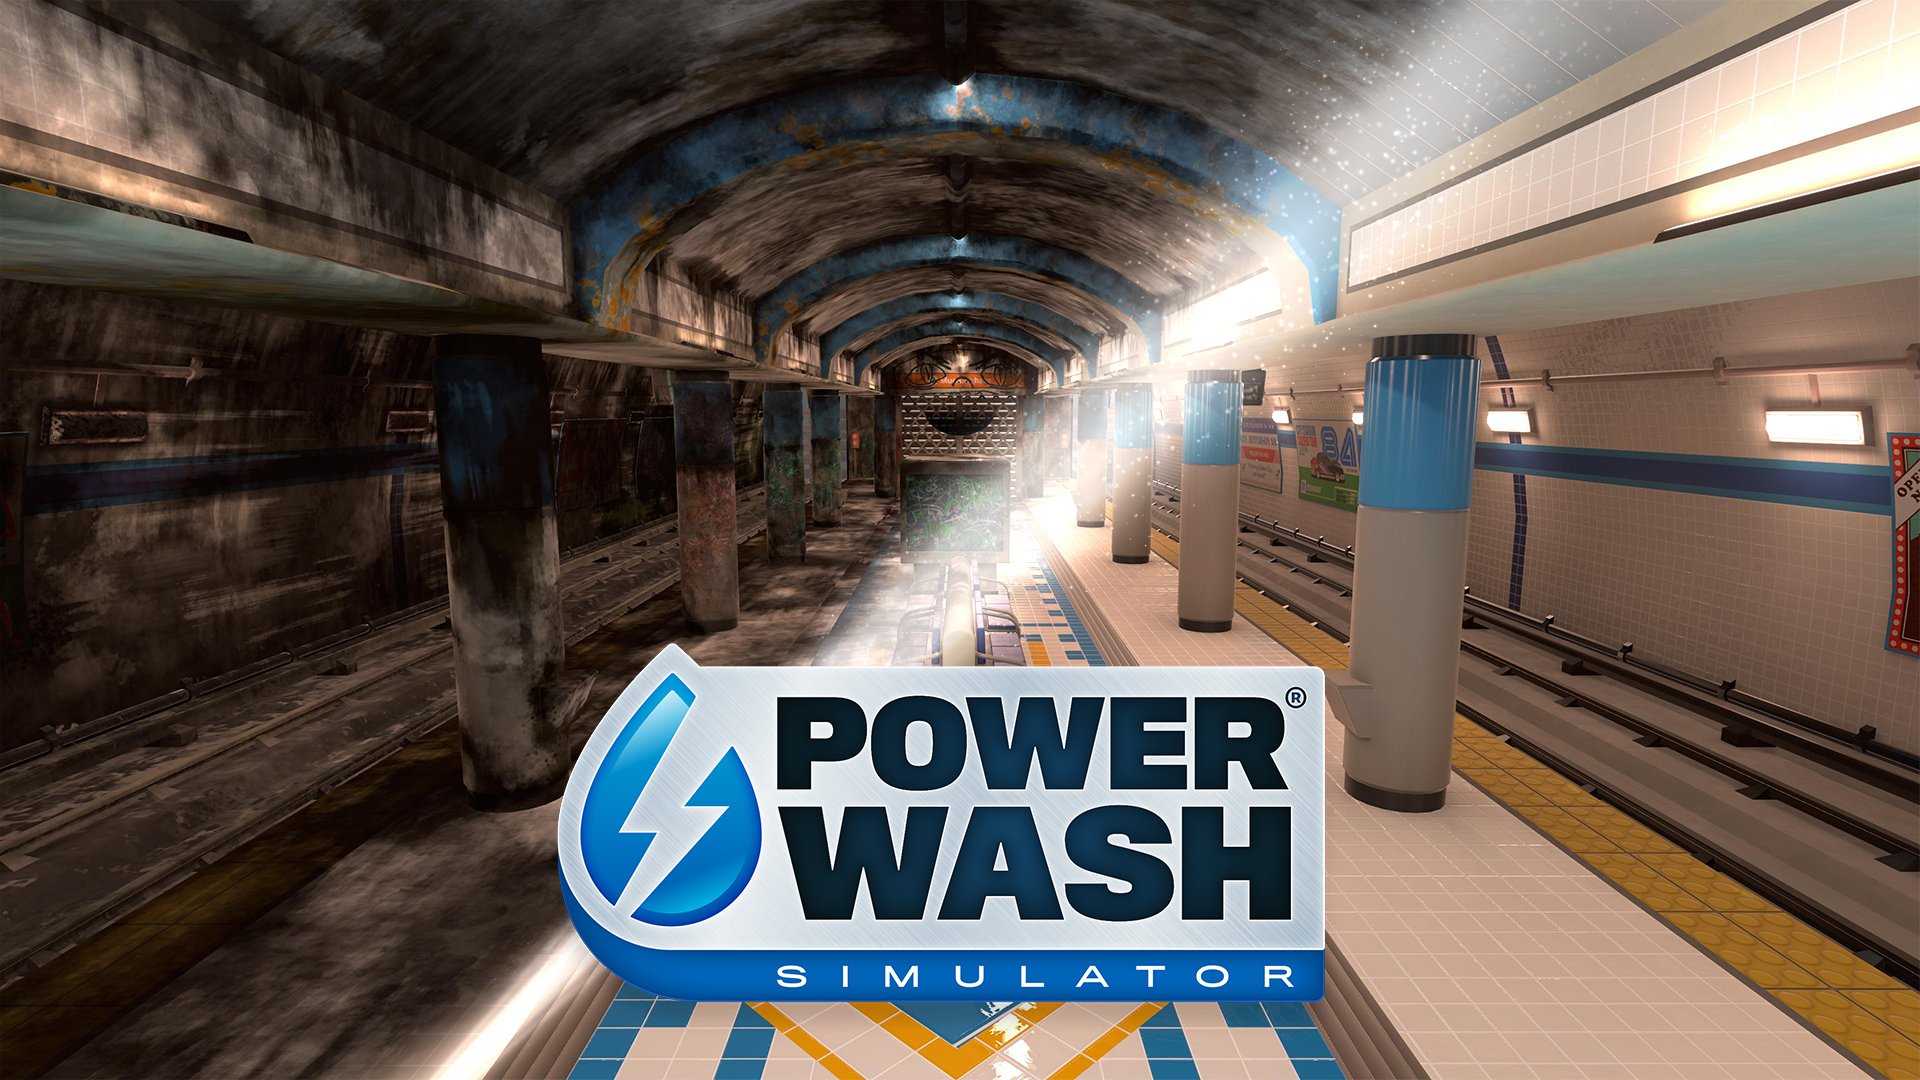 Powerwash Simulator Receives Version 0.8 Update